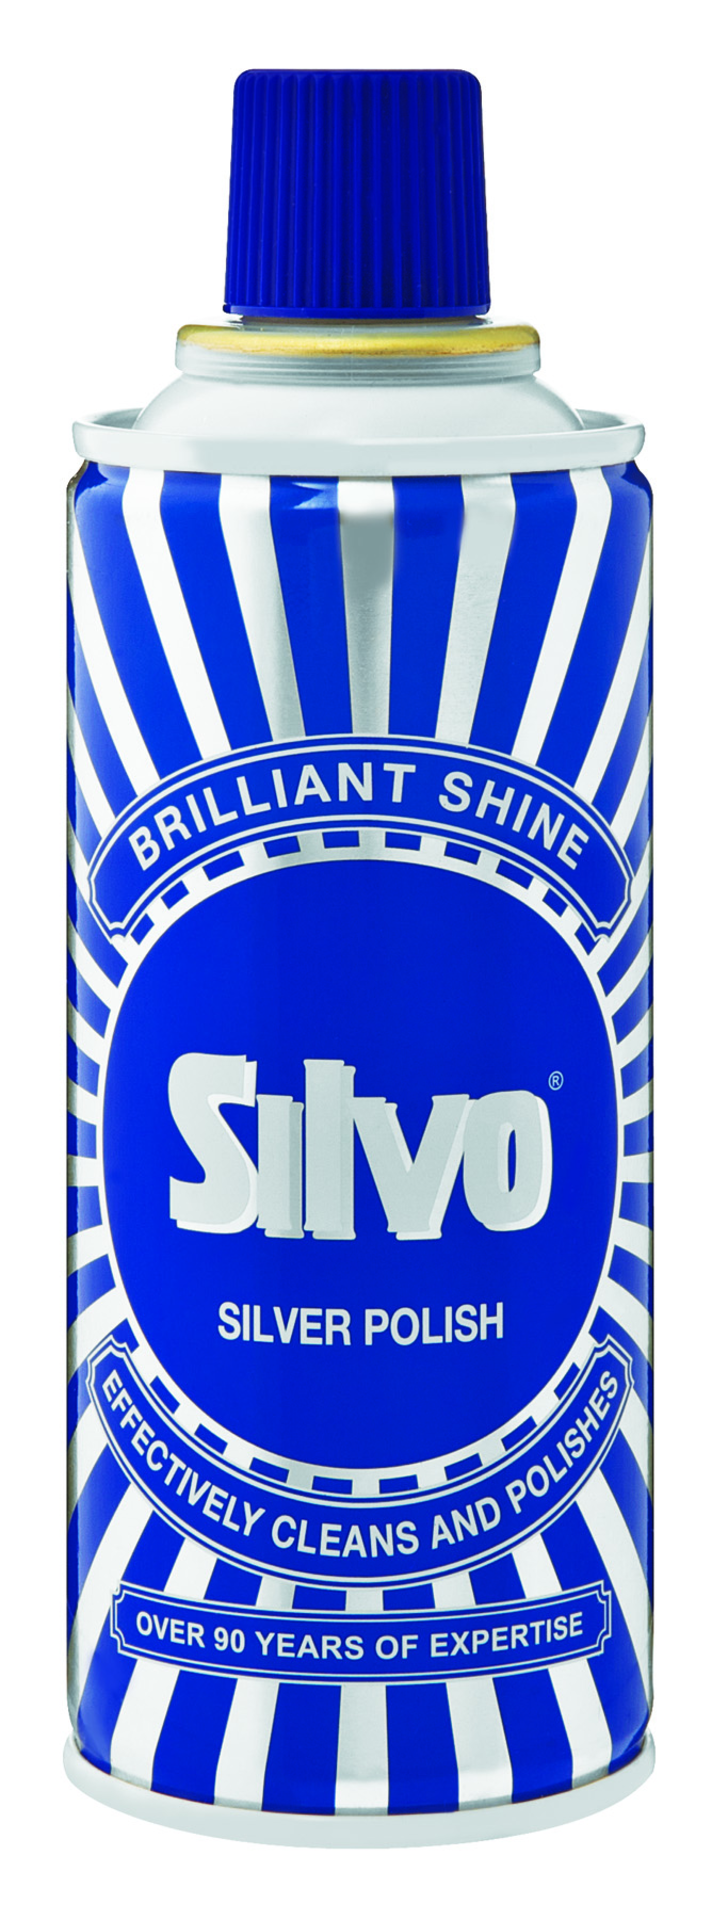 SILBO - silver polish 100ml, NEU !!